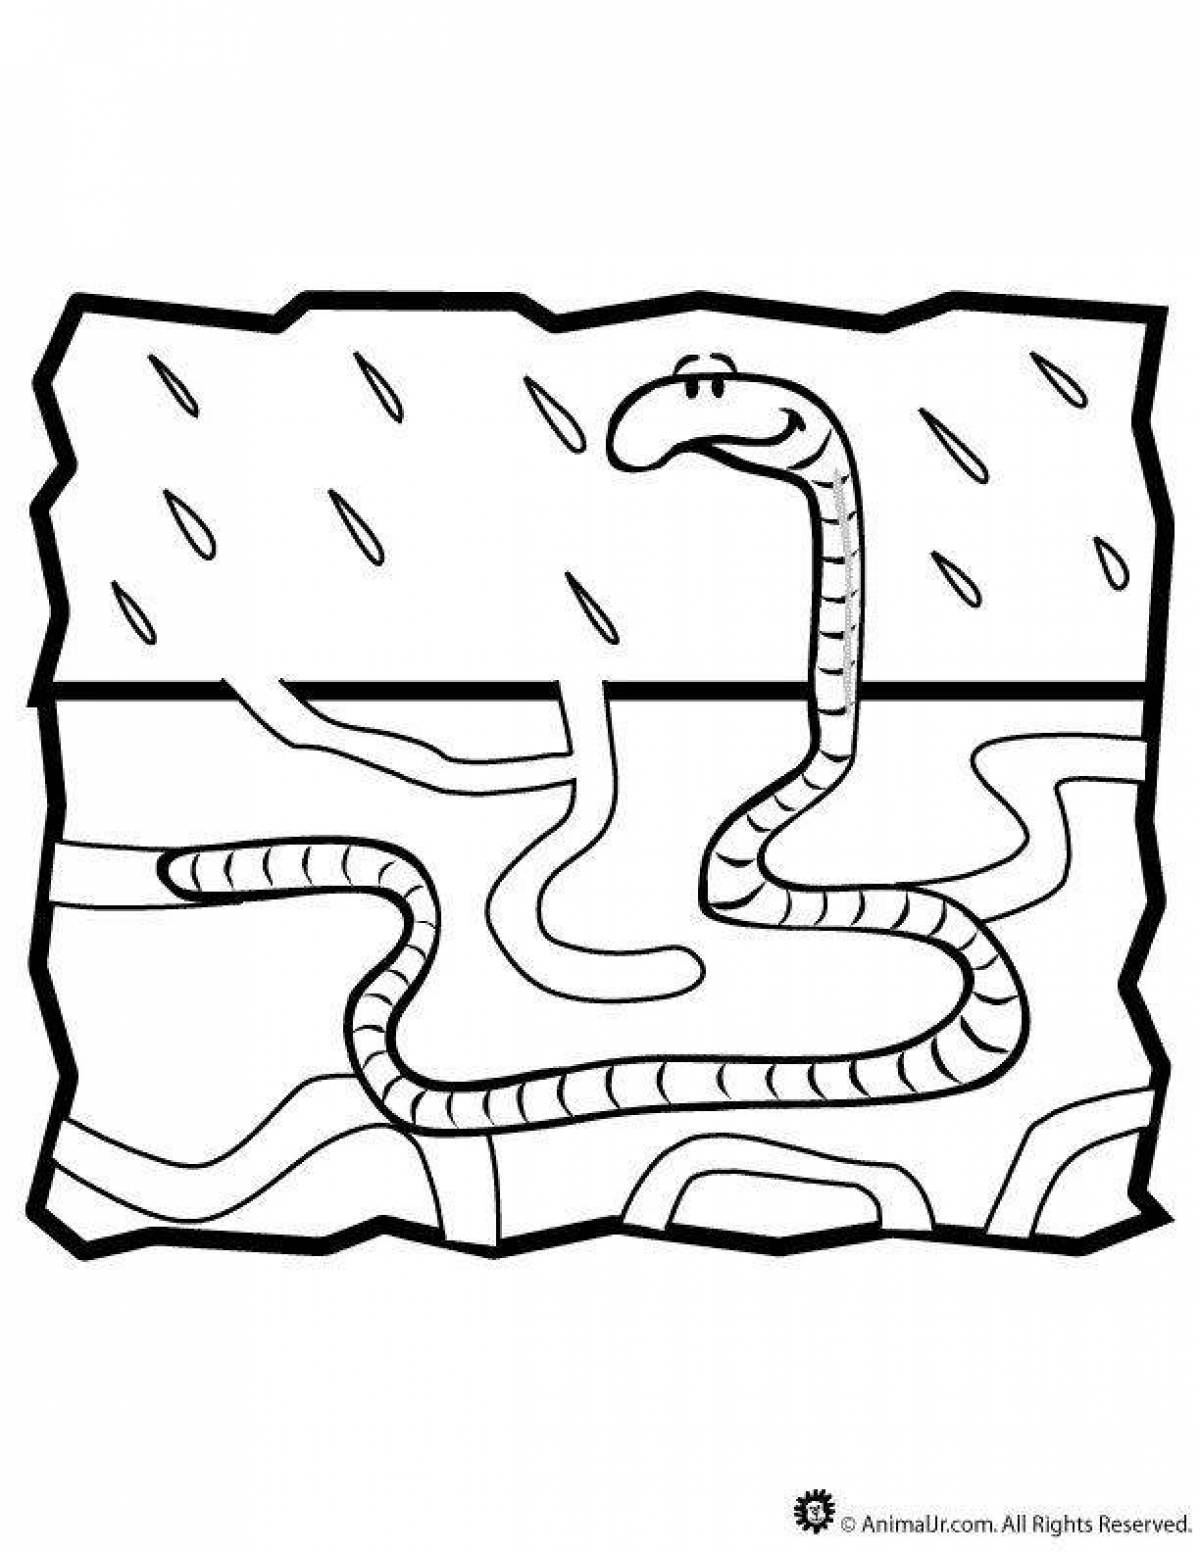 Coloring page amazing bridge worm